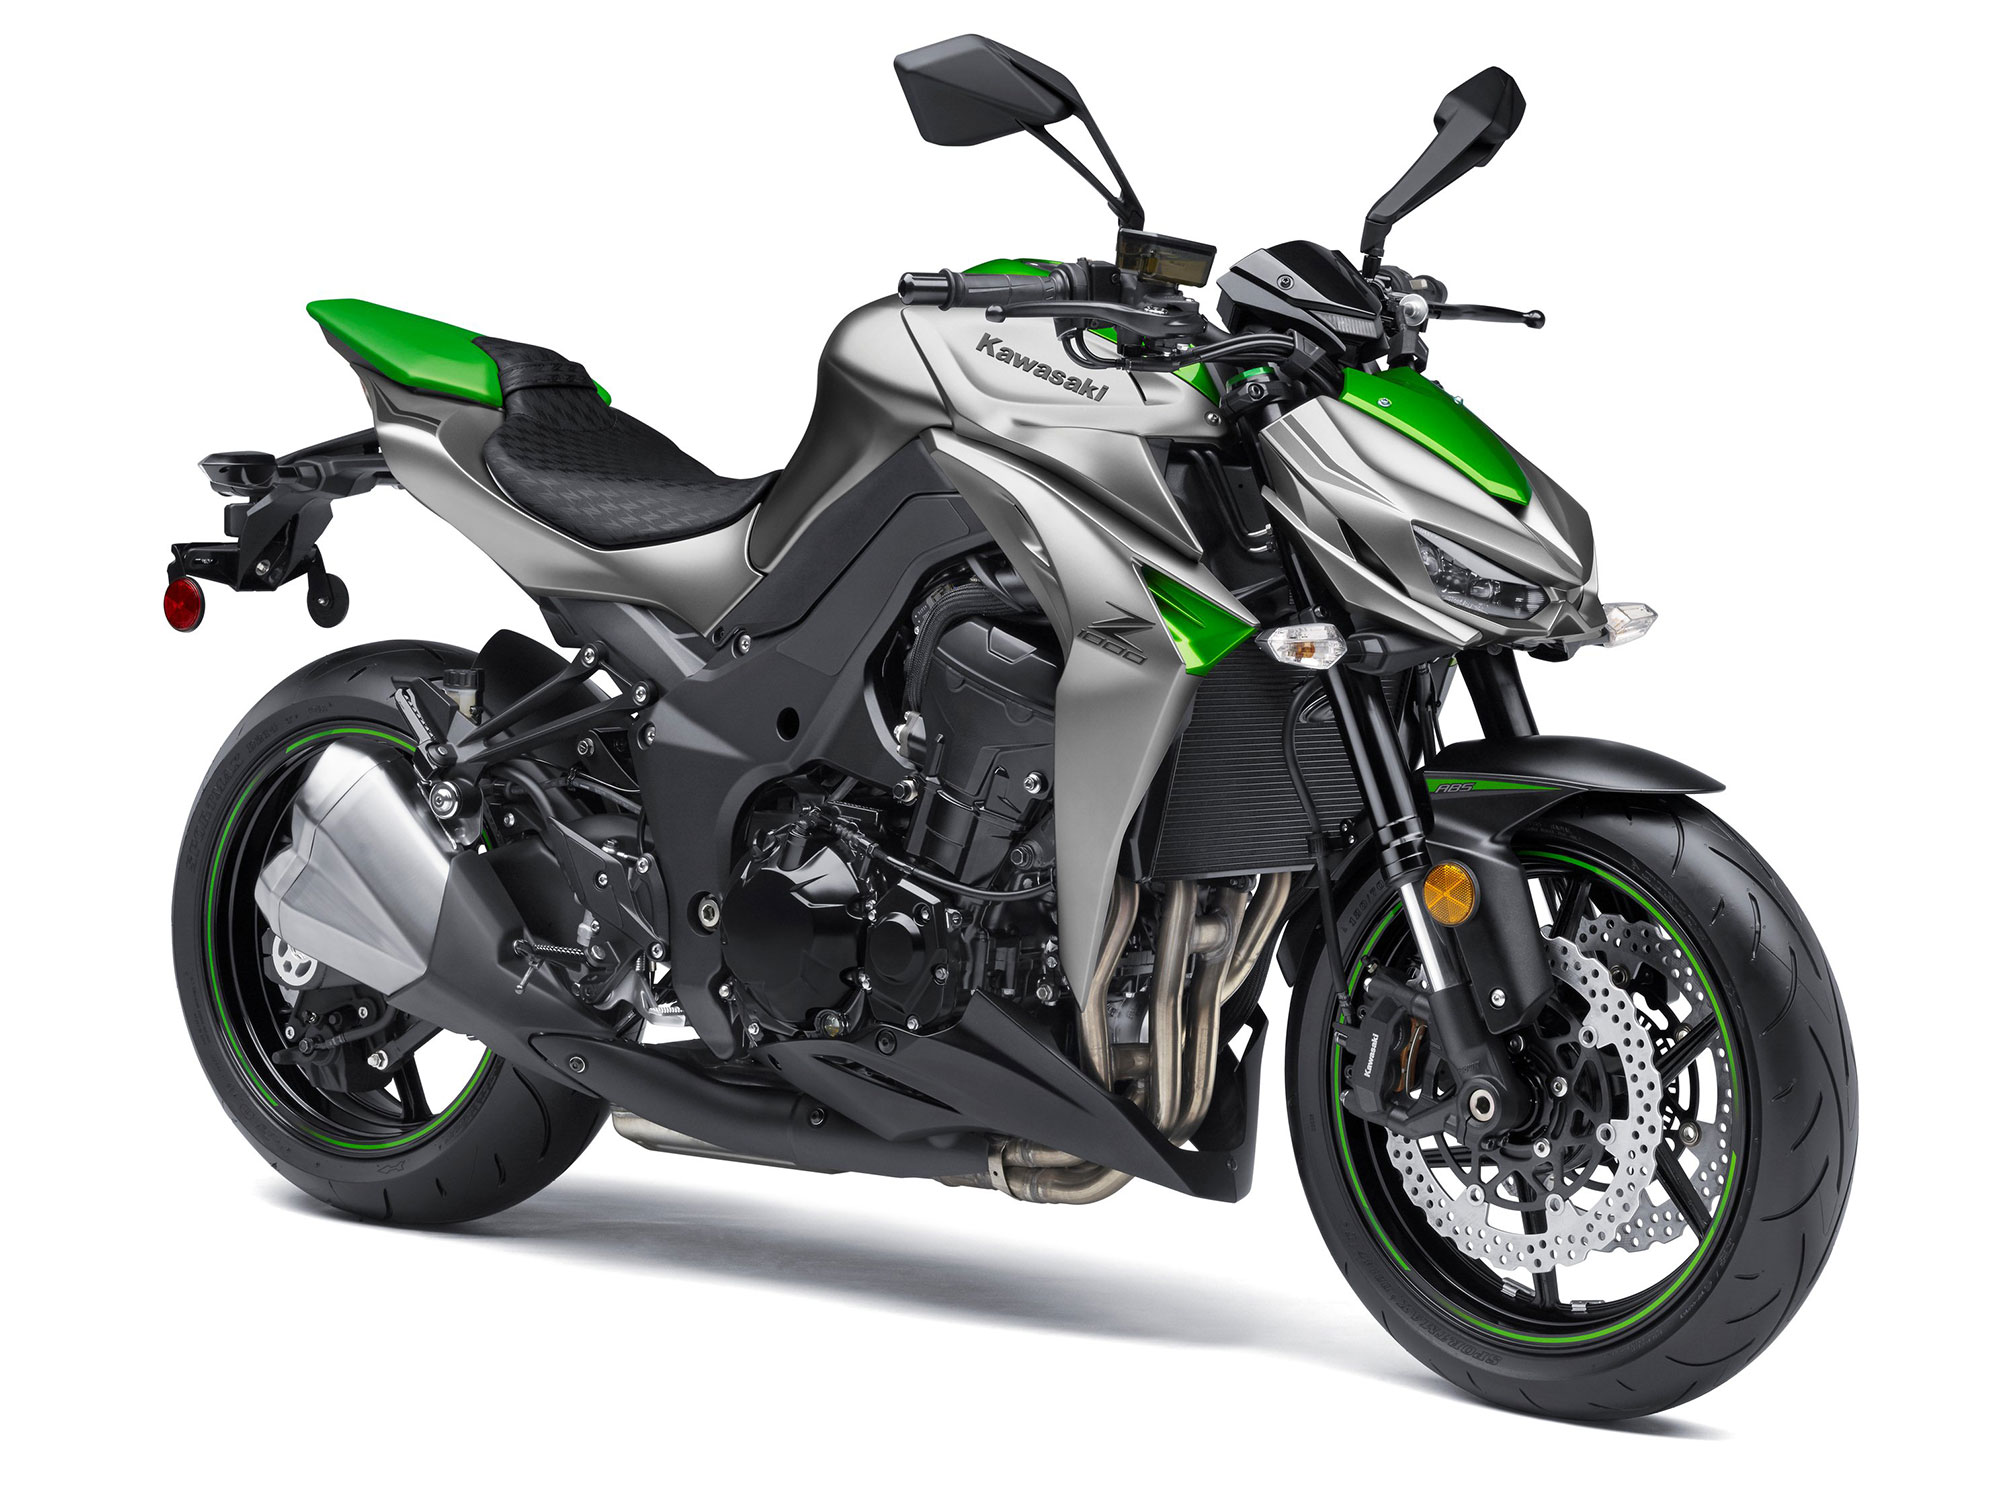 2016 Kawasaki Z1000 bike for sale in mumbai - Post Free 